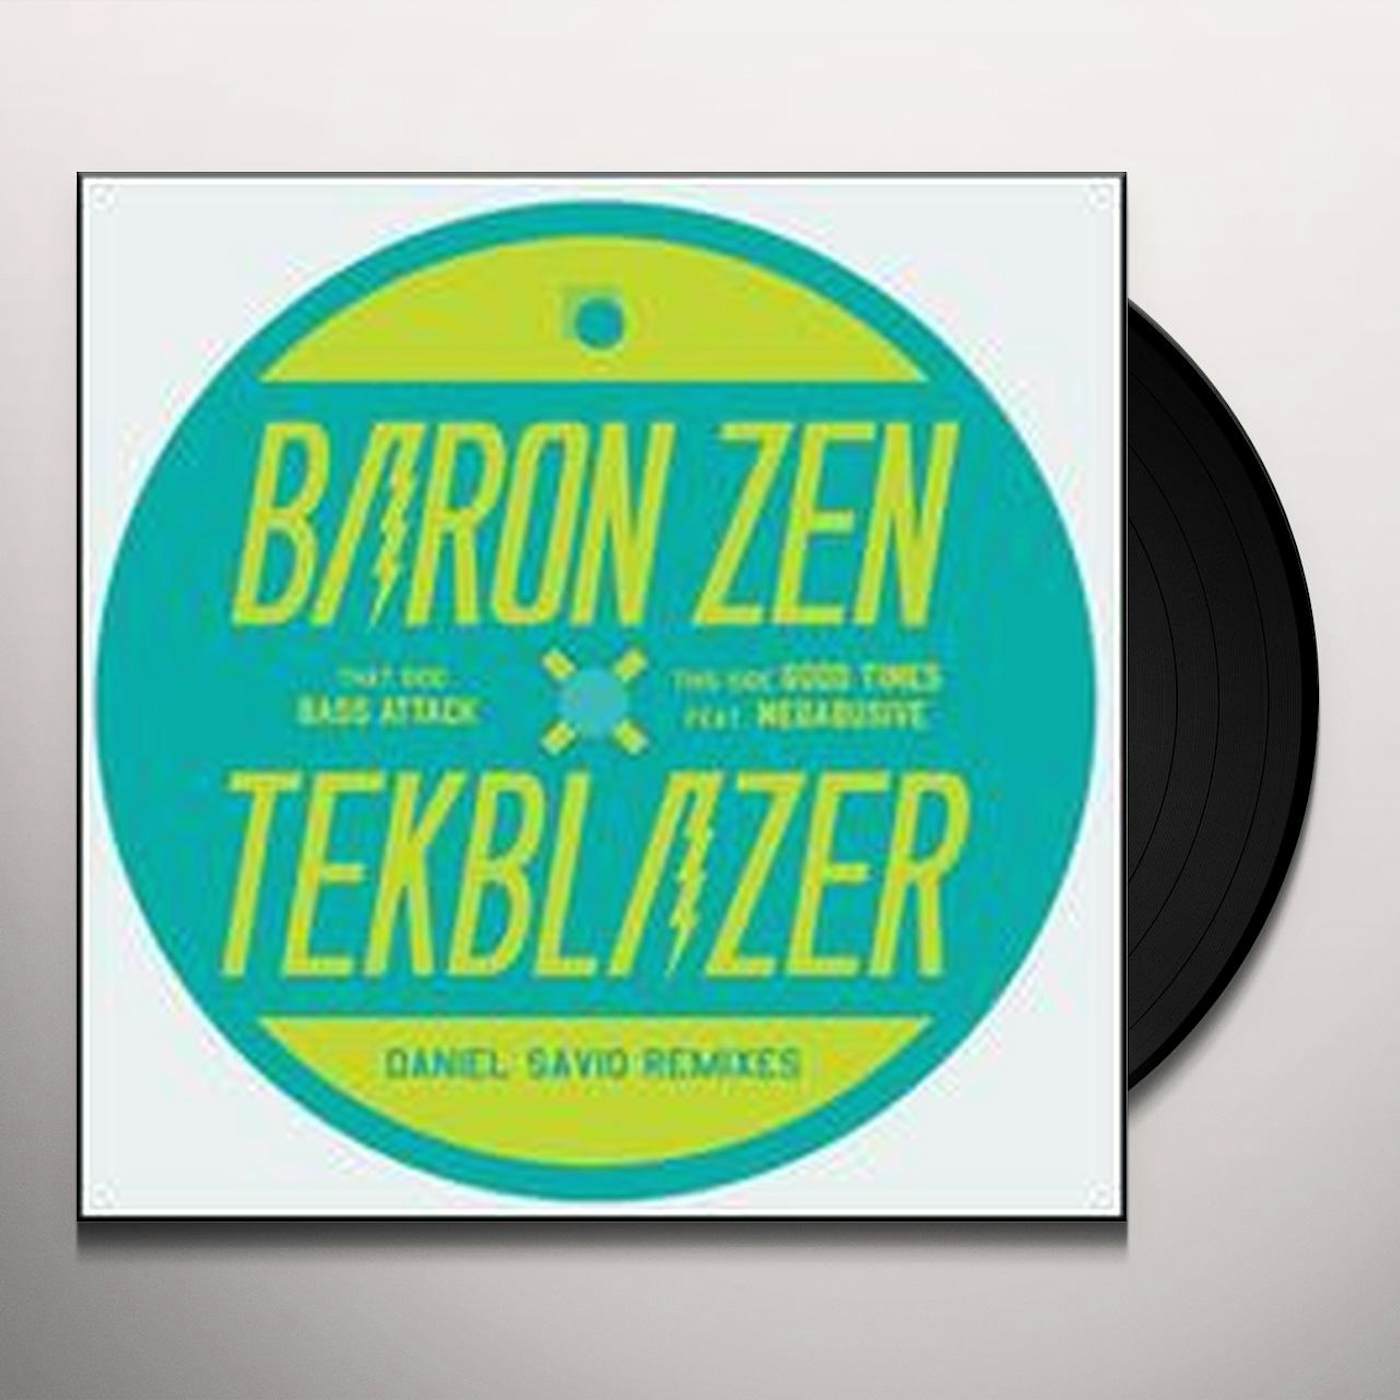 Baron Zen & Tekblazer BASS ATTACK/GOOD TIMES Vinyl Record